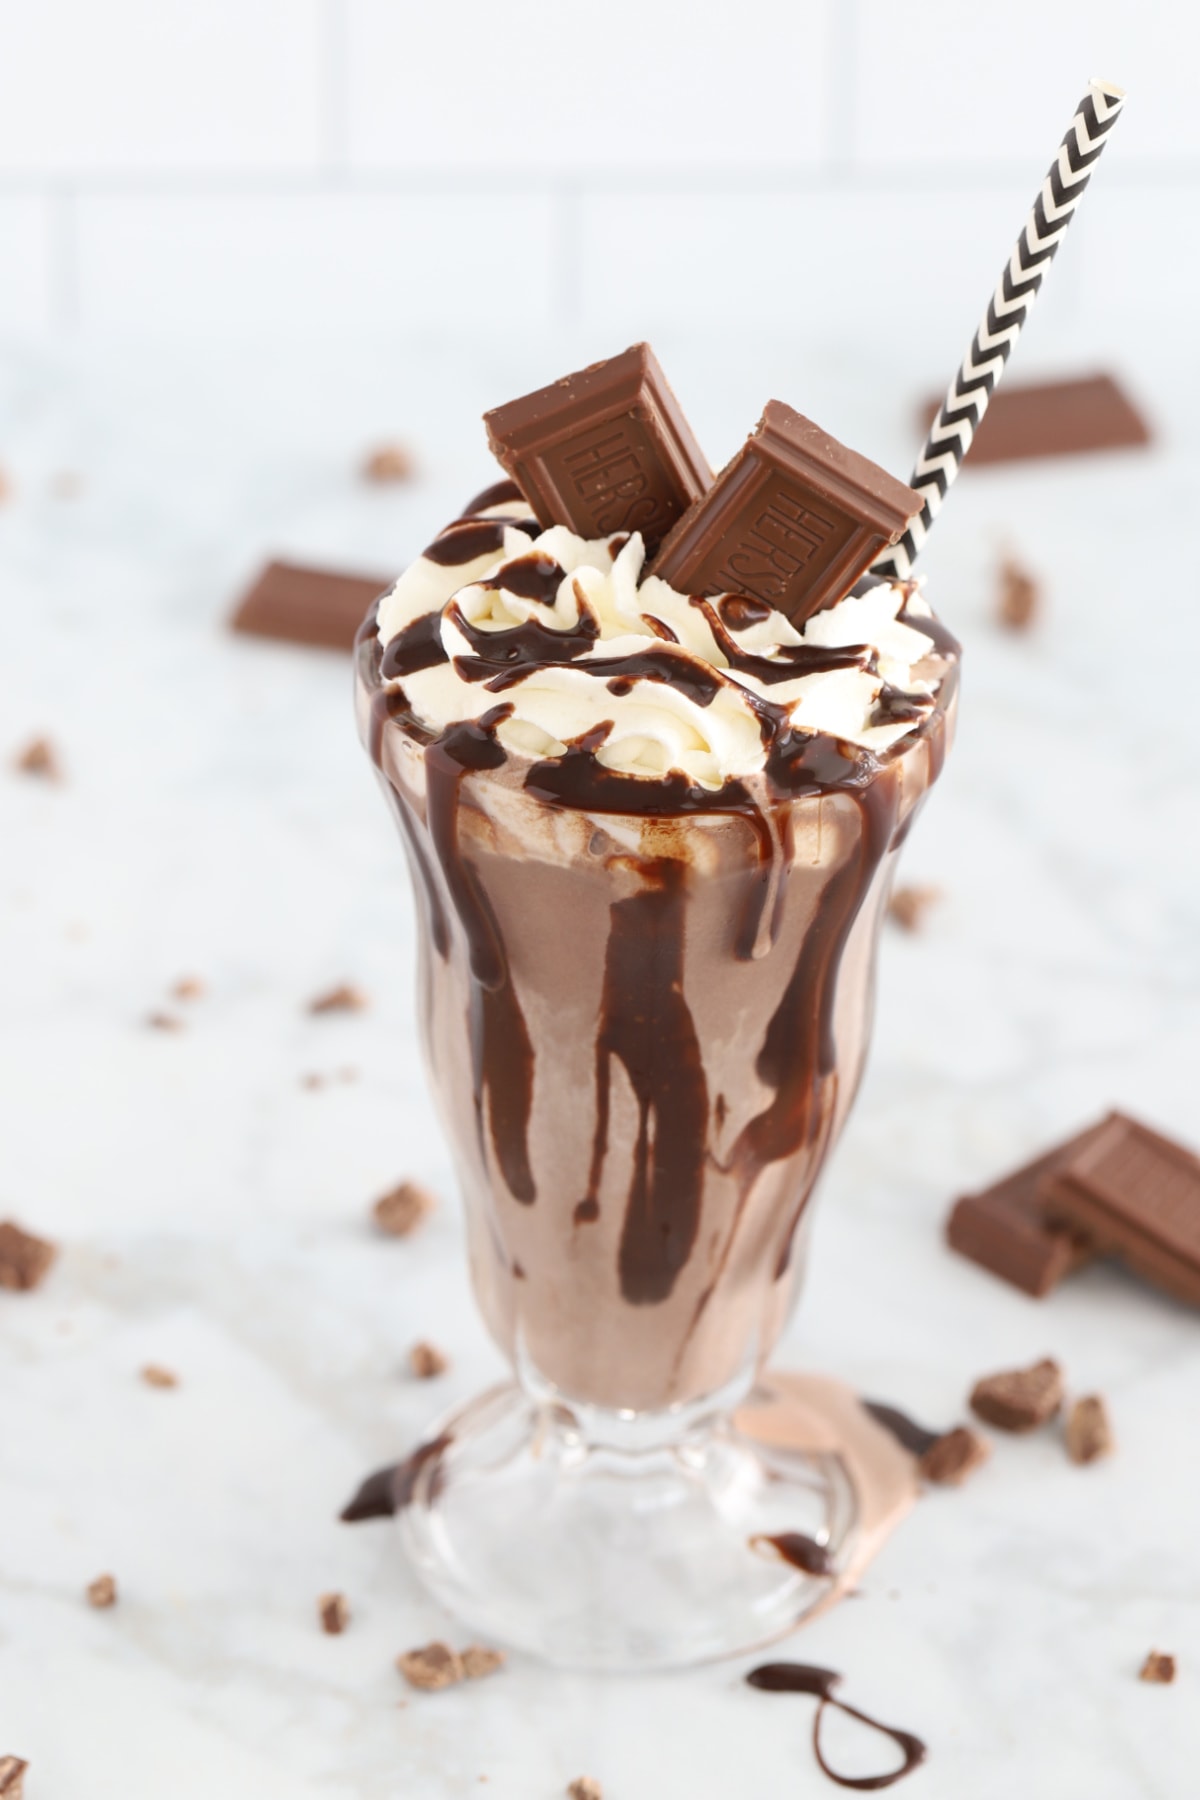 Chocolate milkshake in a large glass